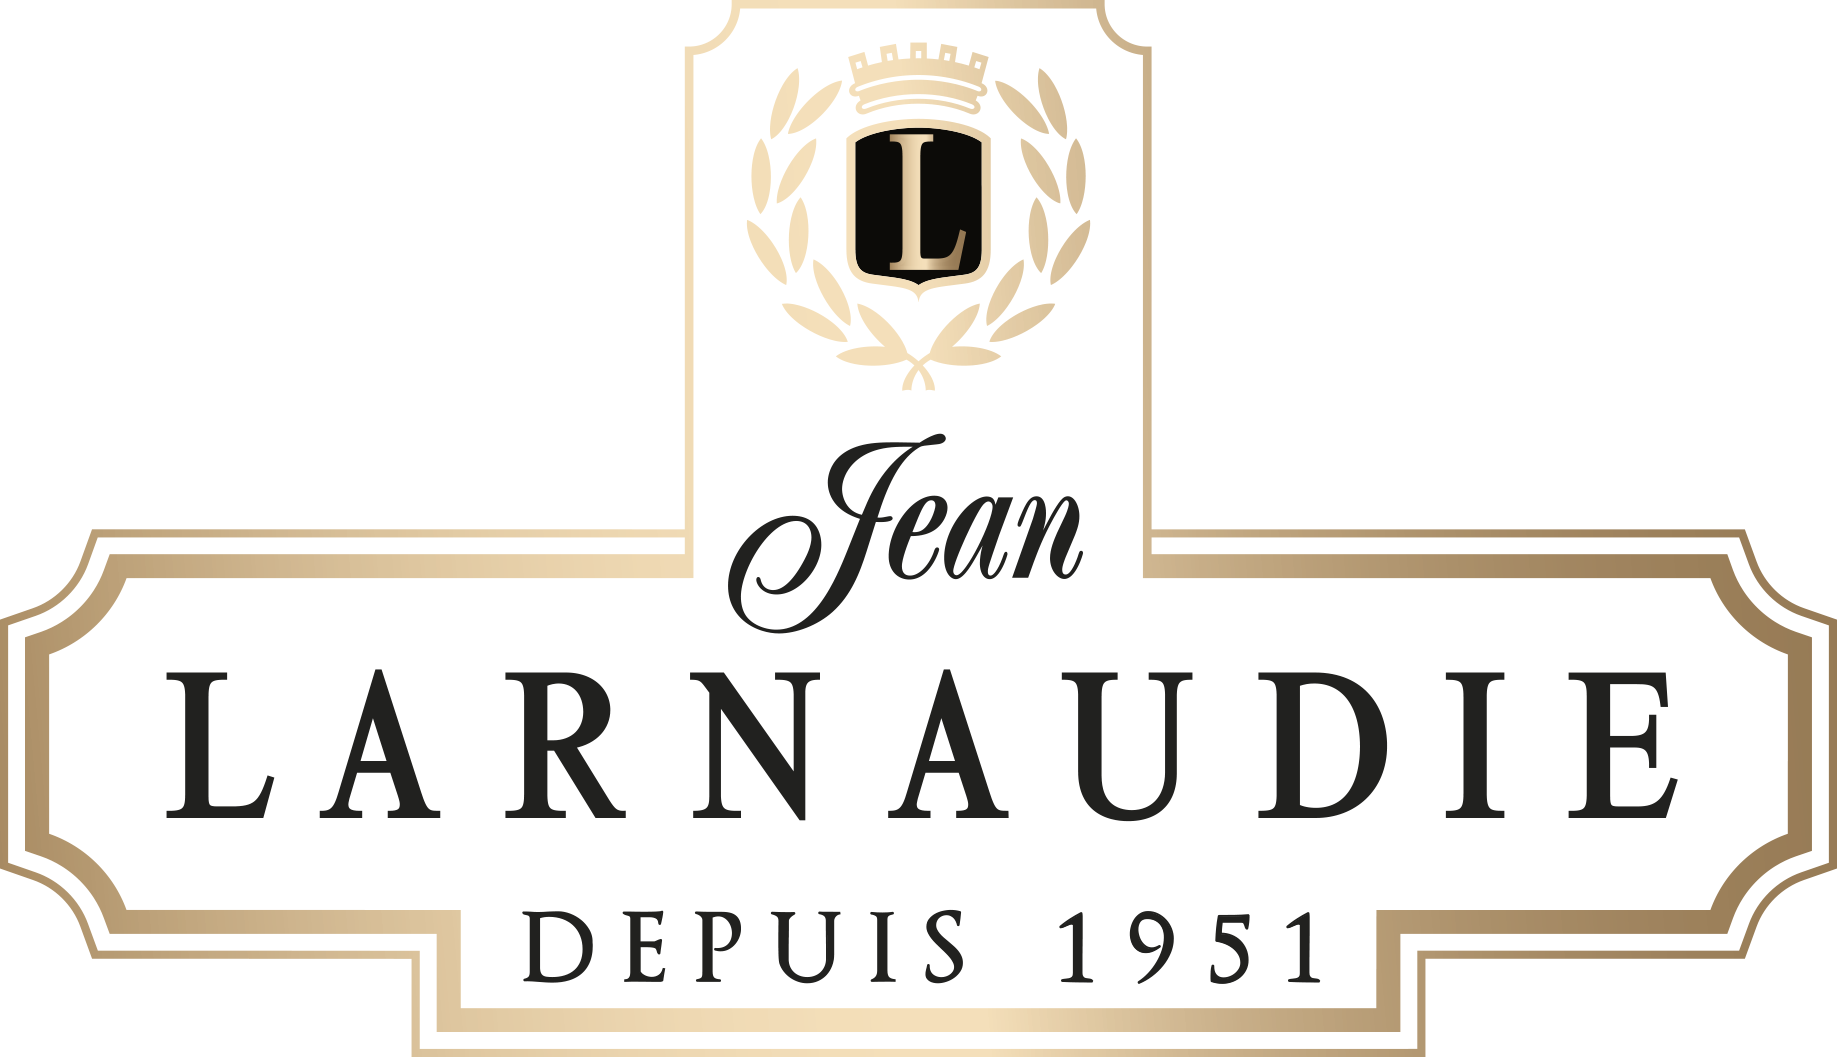 Logo Jean Larnaudie